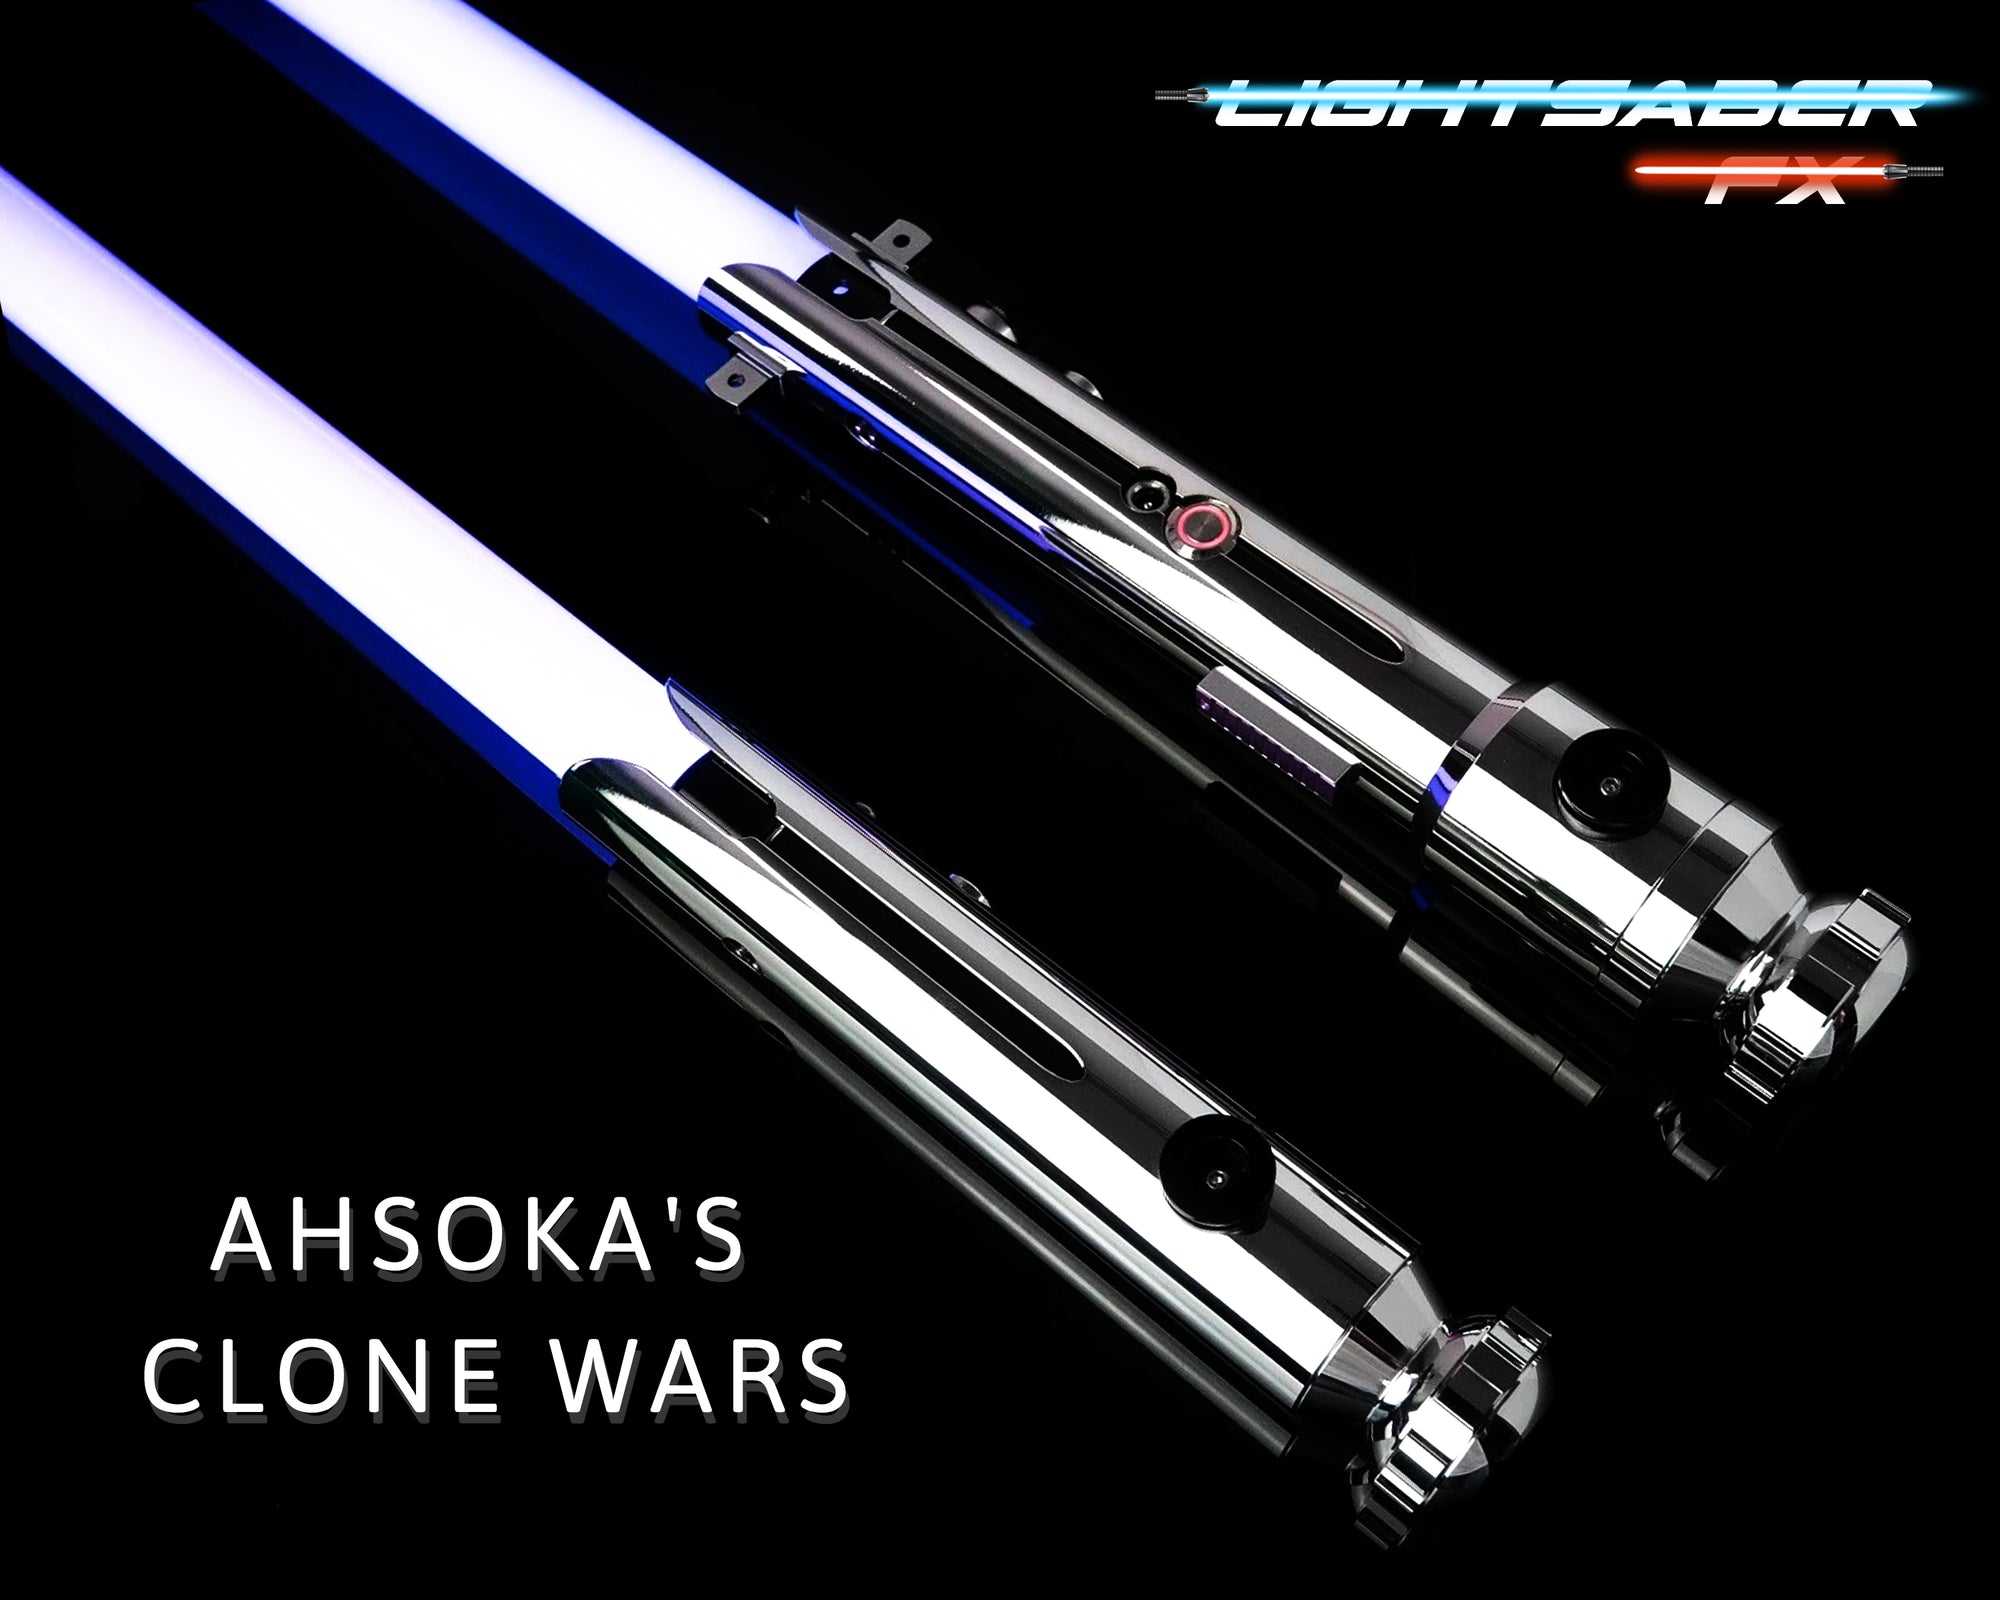 Ahsoka's Clone Wars